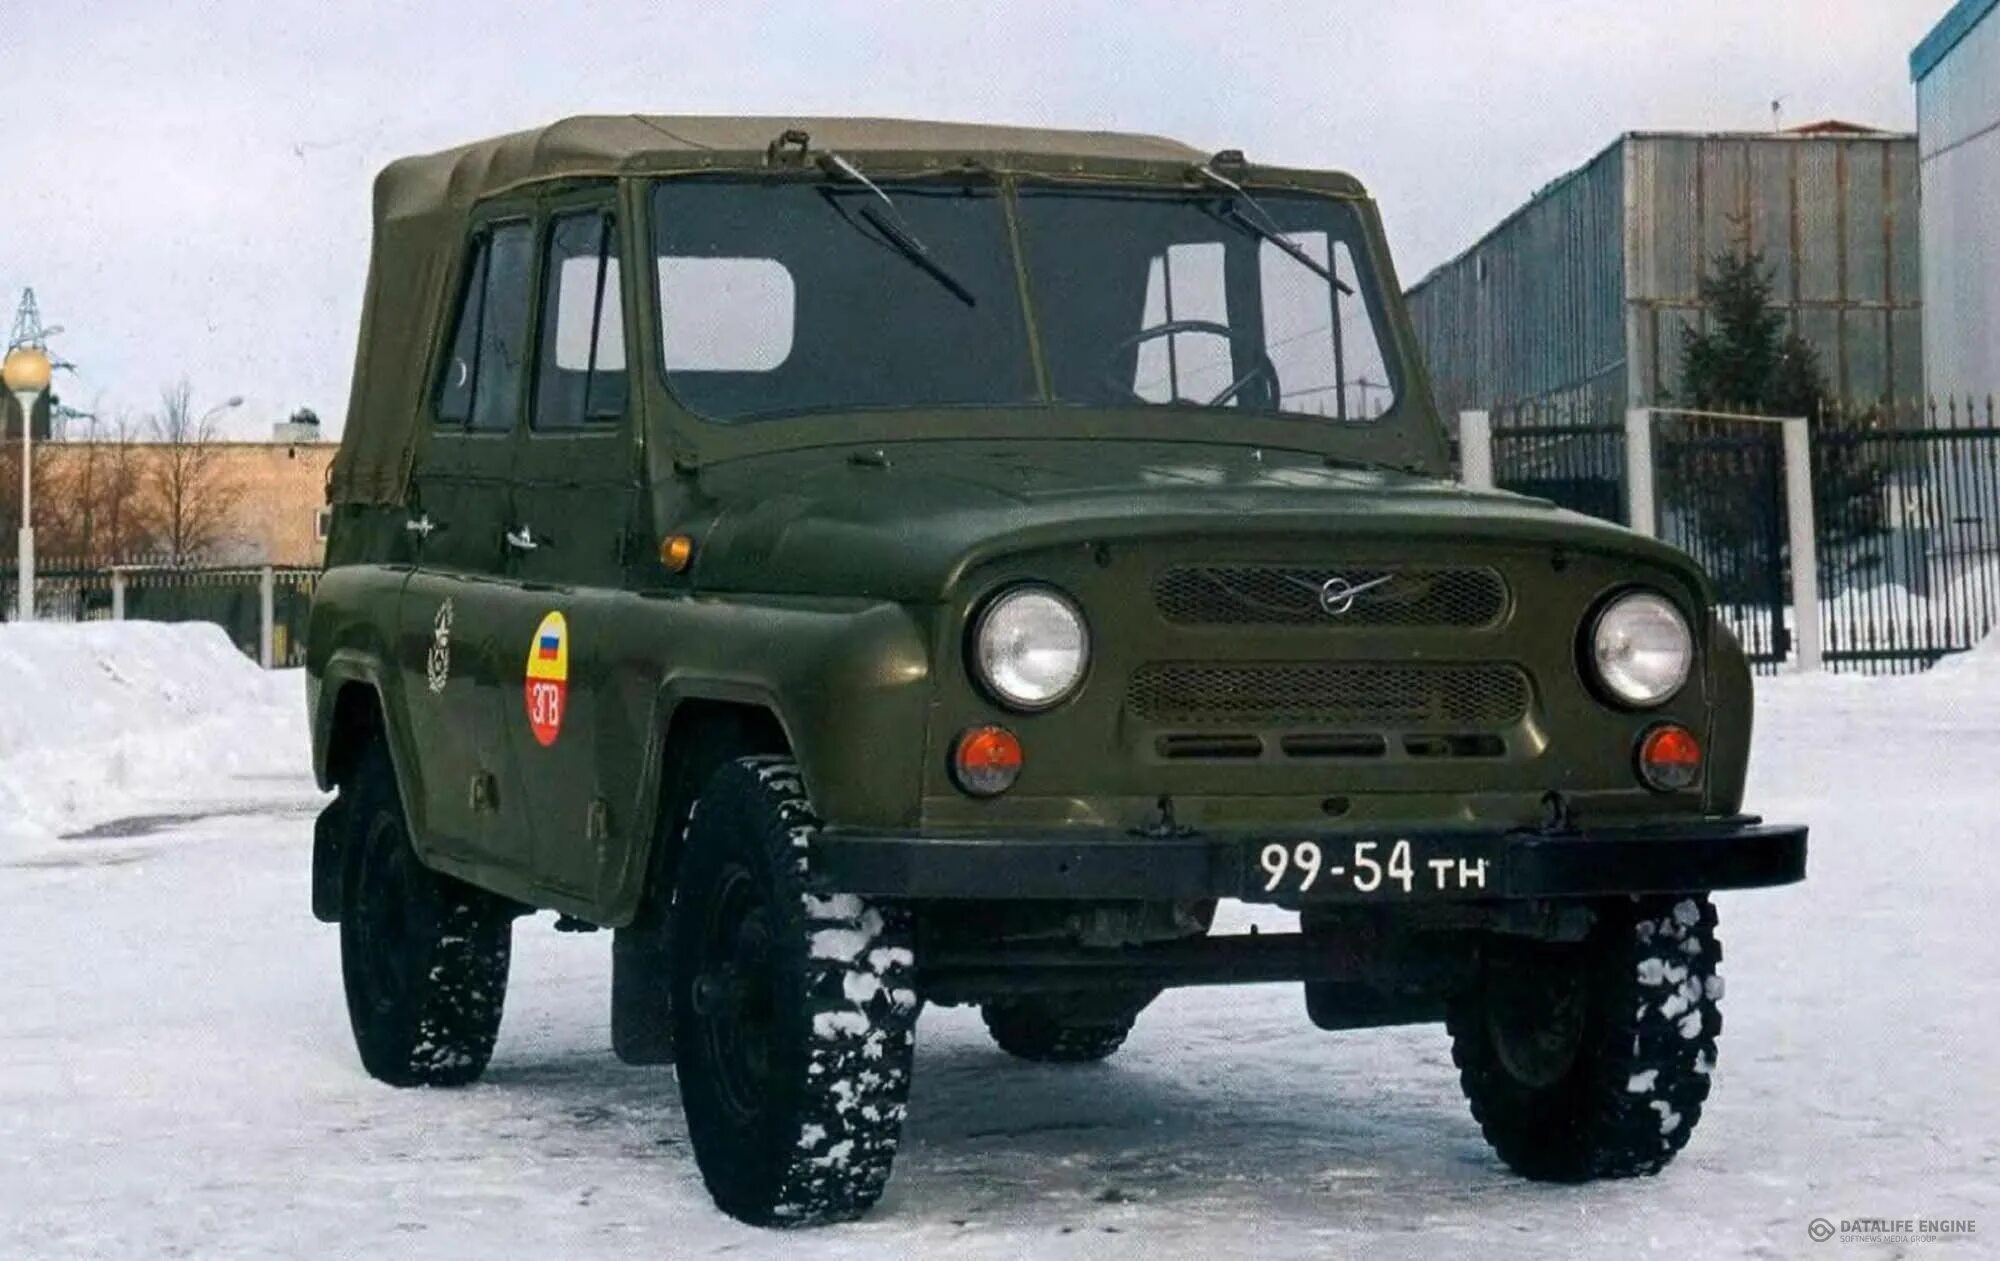 УАЗ-469 внедорожник военный. УАЗ 469 армейский. УАЗ-469 «козёл». УАЗ 469 В армии.